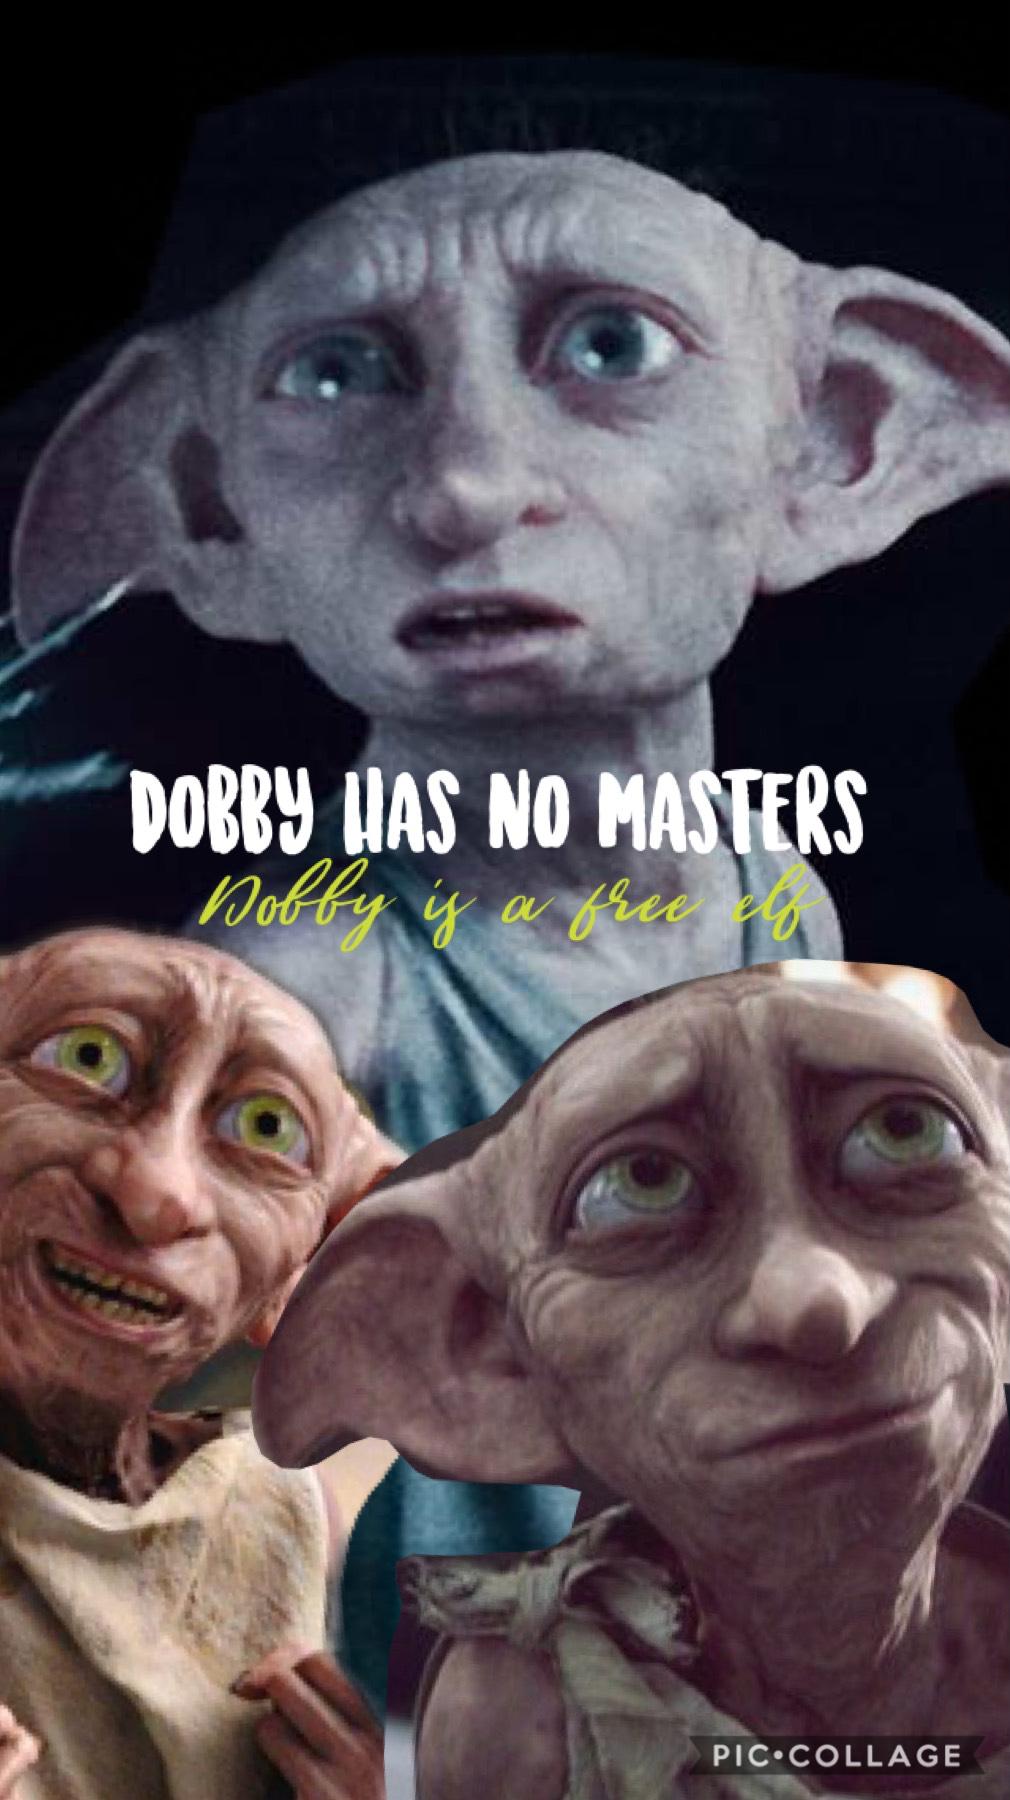 RIP Dobby